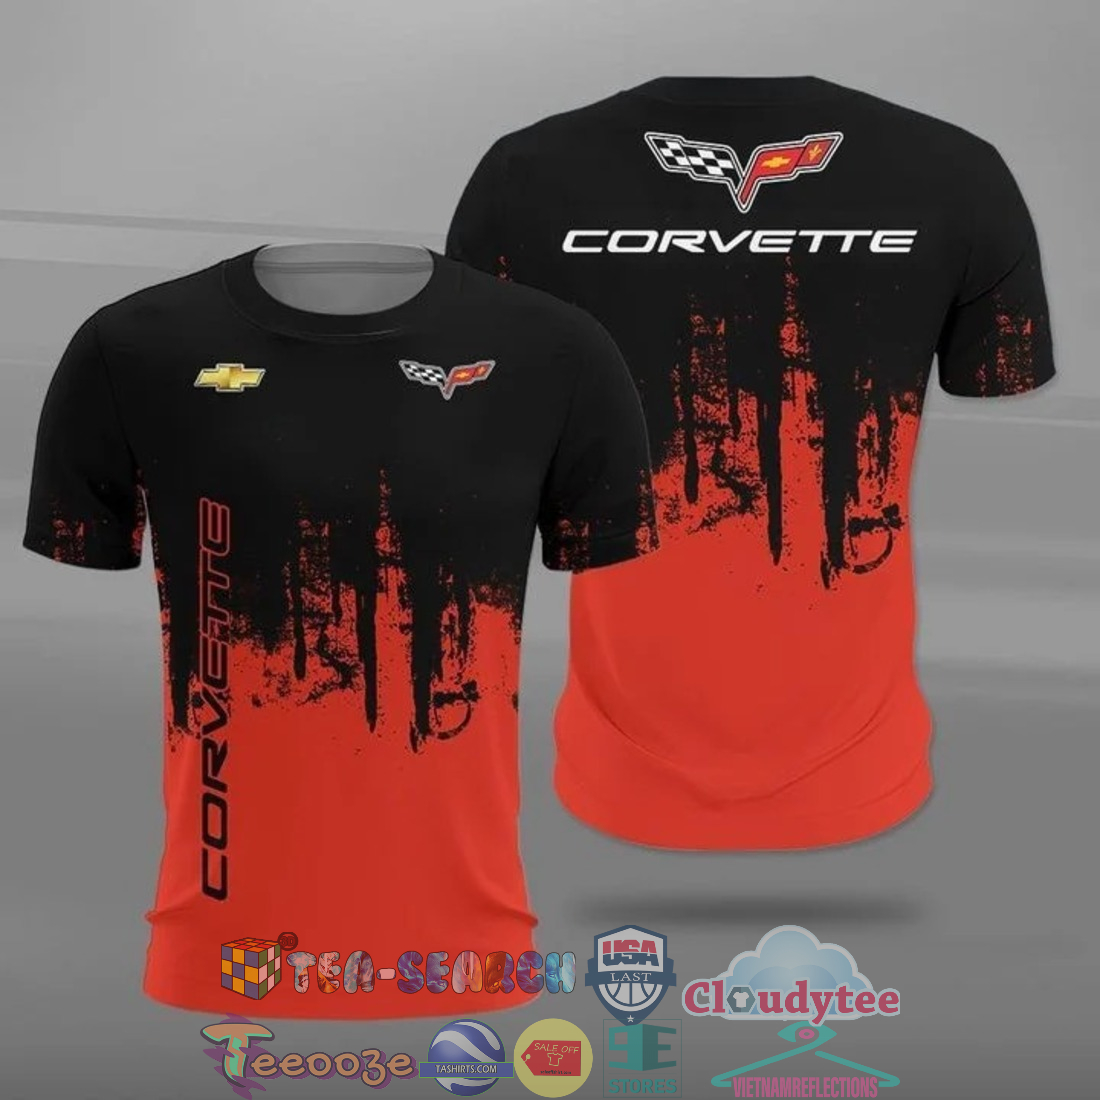 VvJr1p7o-TH130522-02xxxChevrolet-Corvette-ver-2-all-over-printed-t-shirt-hoodie3.jpg